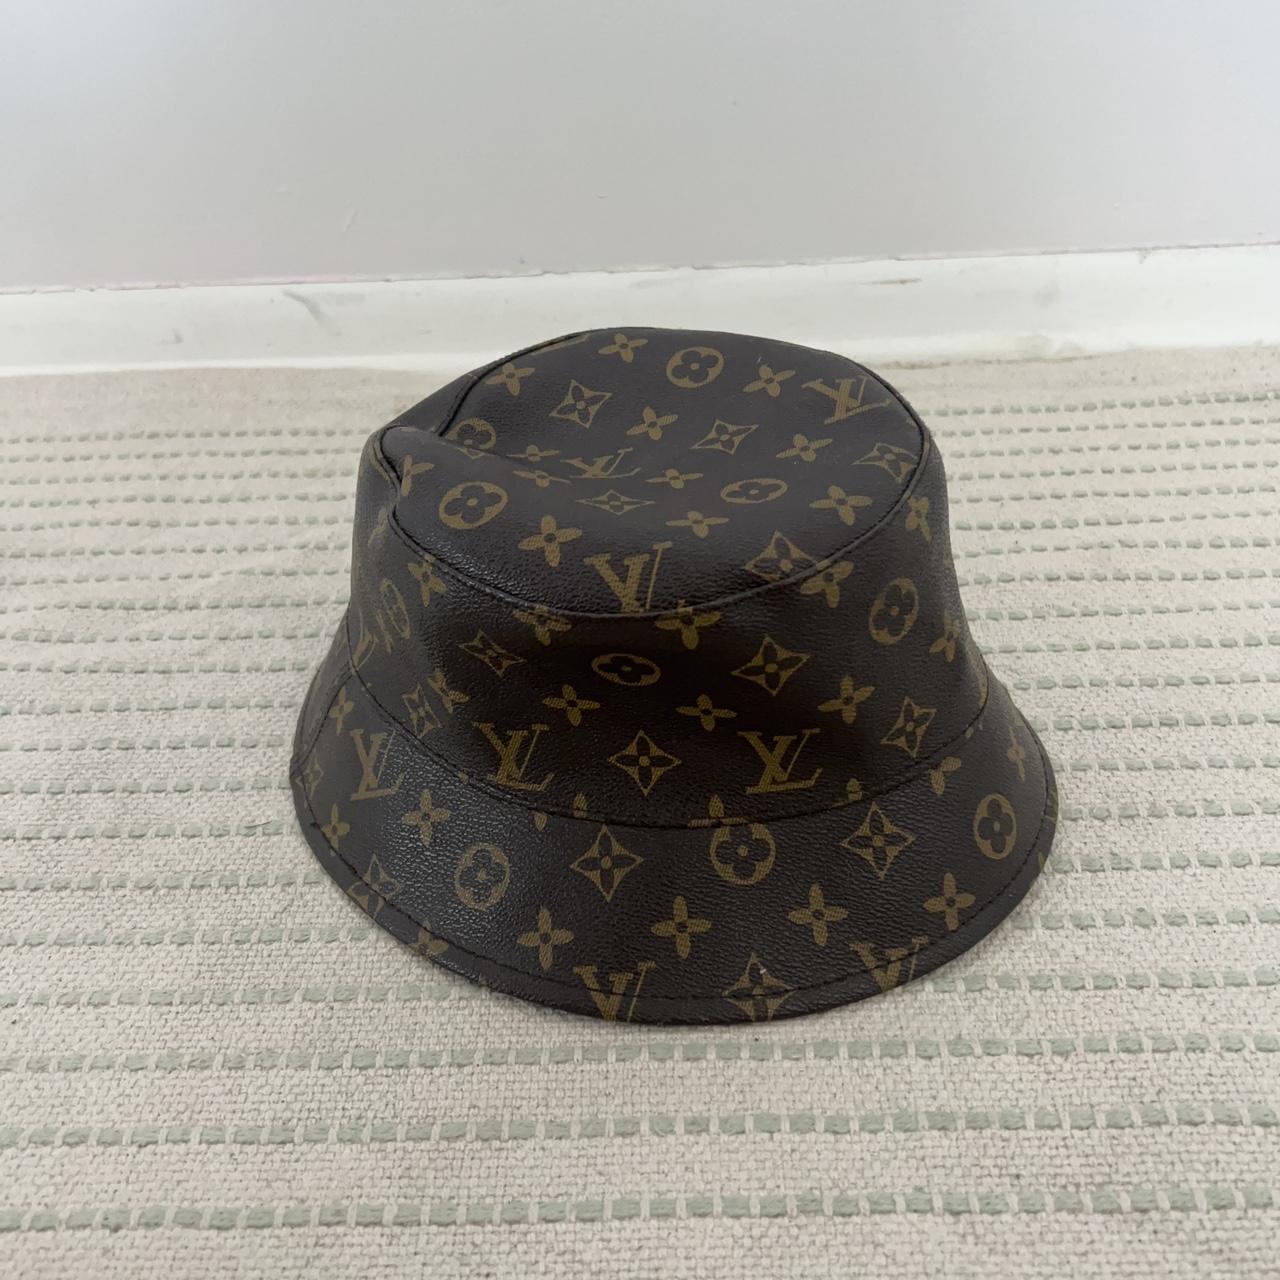 Leather Louis Vuitton bucket hat #designer #mint - Depop